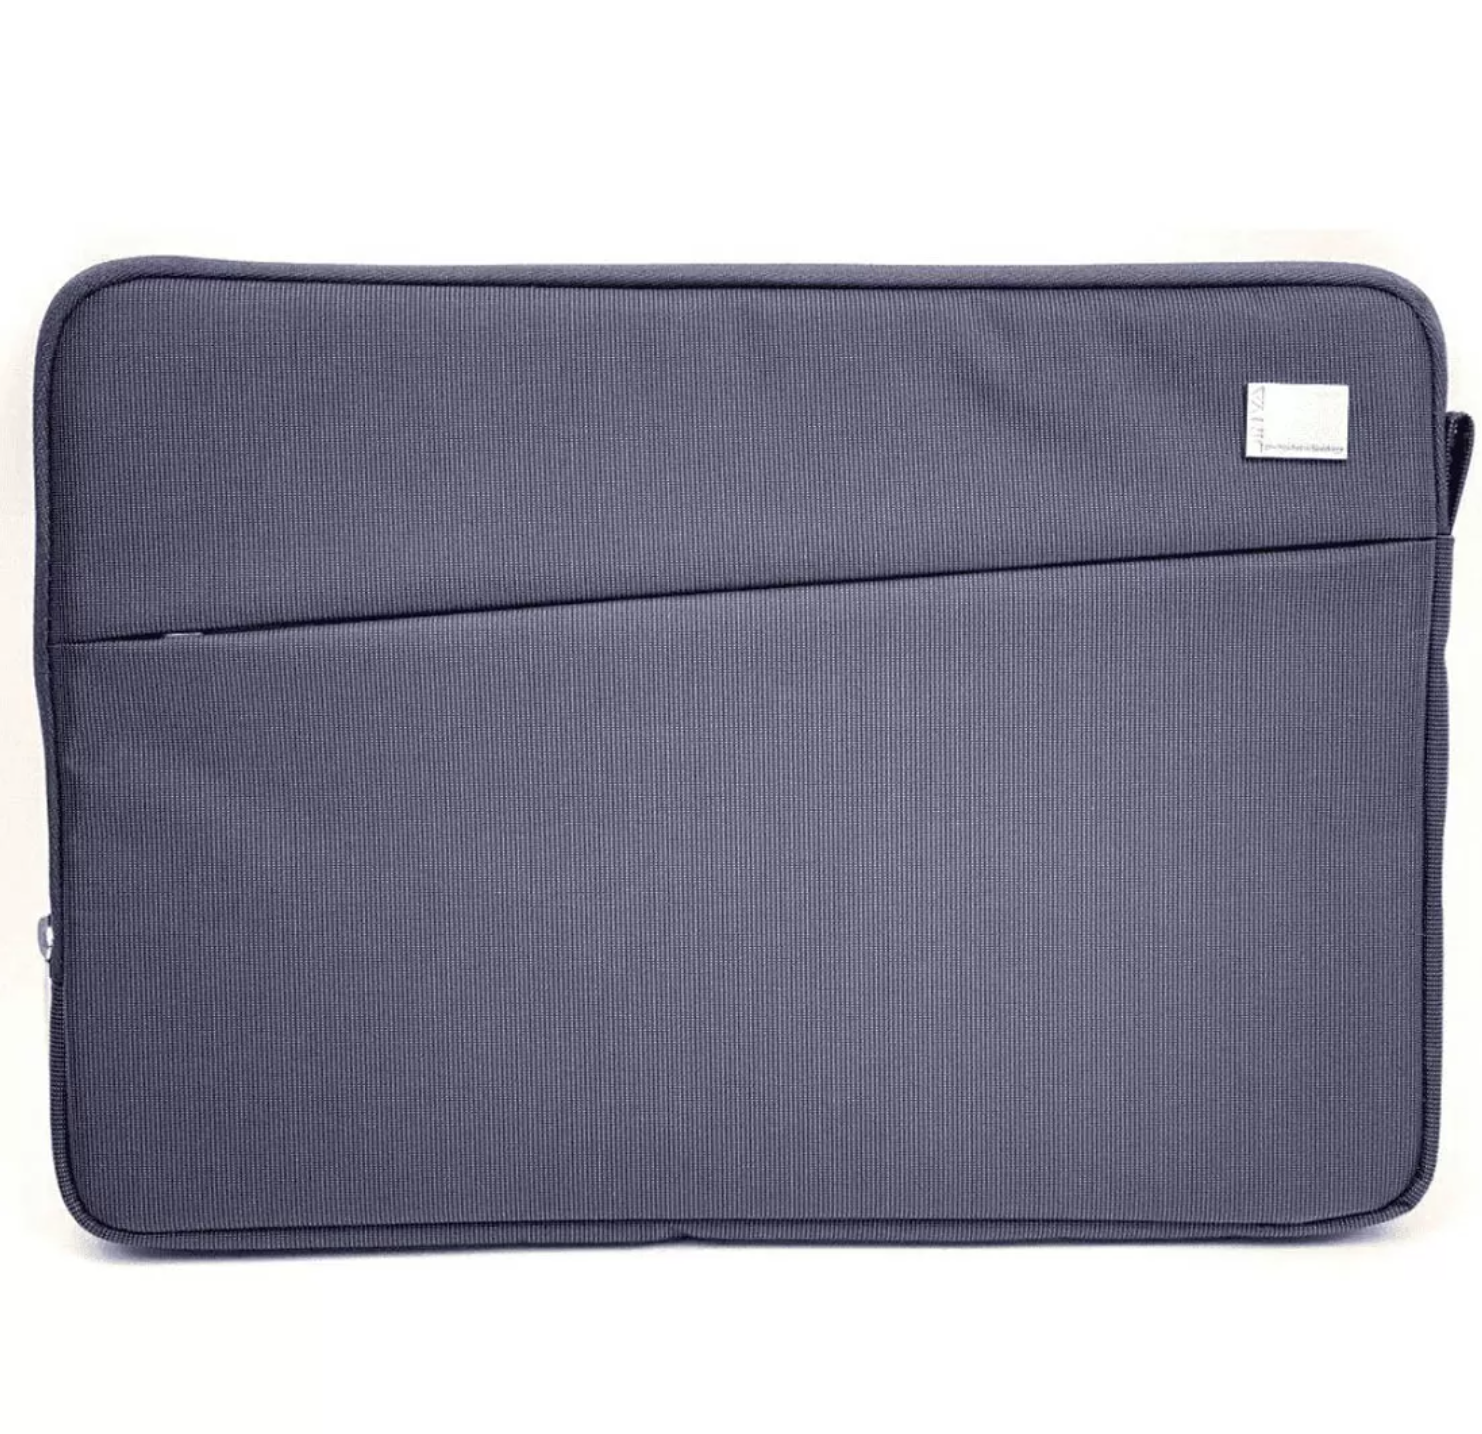 Jinya City Sleeve Fabric Macbook